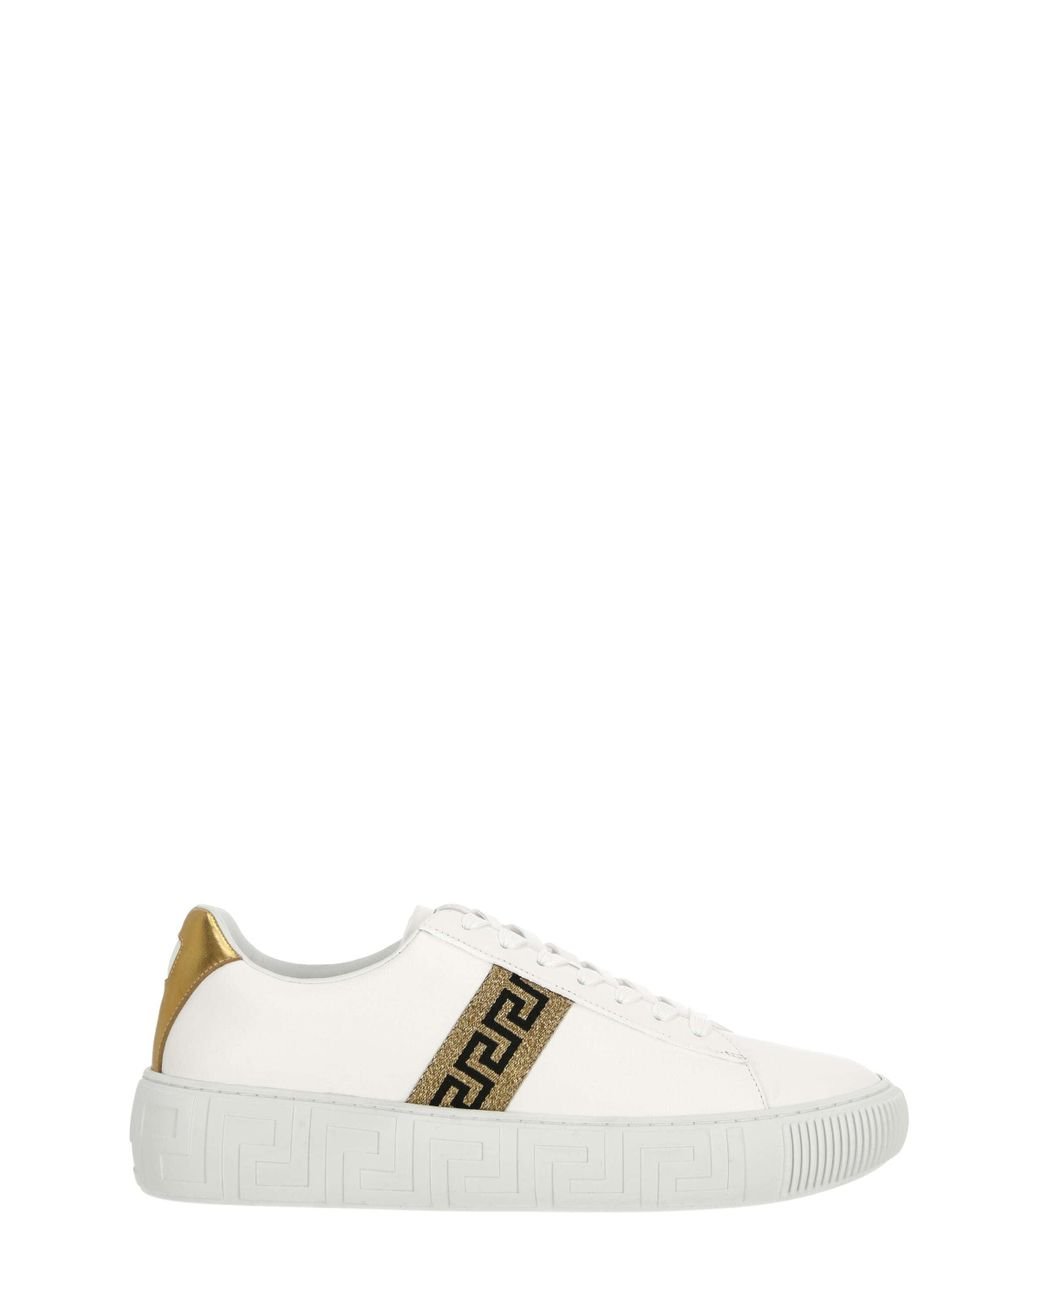 Versace White/gold/black Leather Greca-print Flatform Sneakers for Men ...